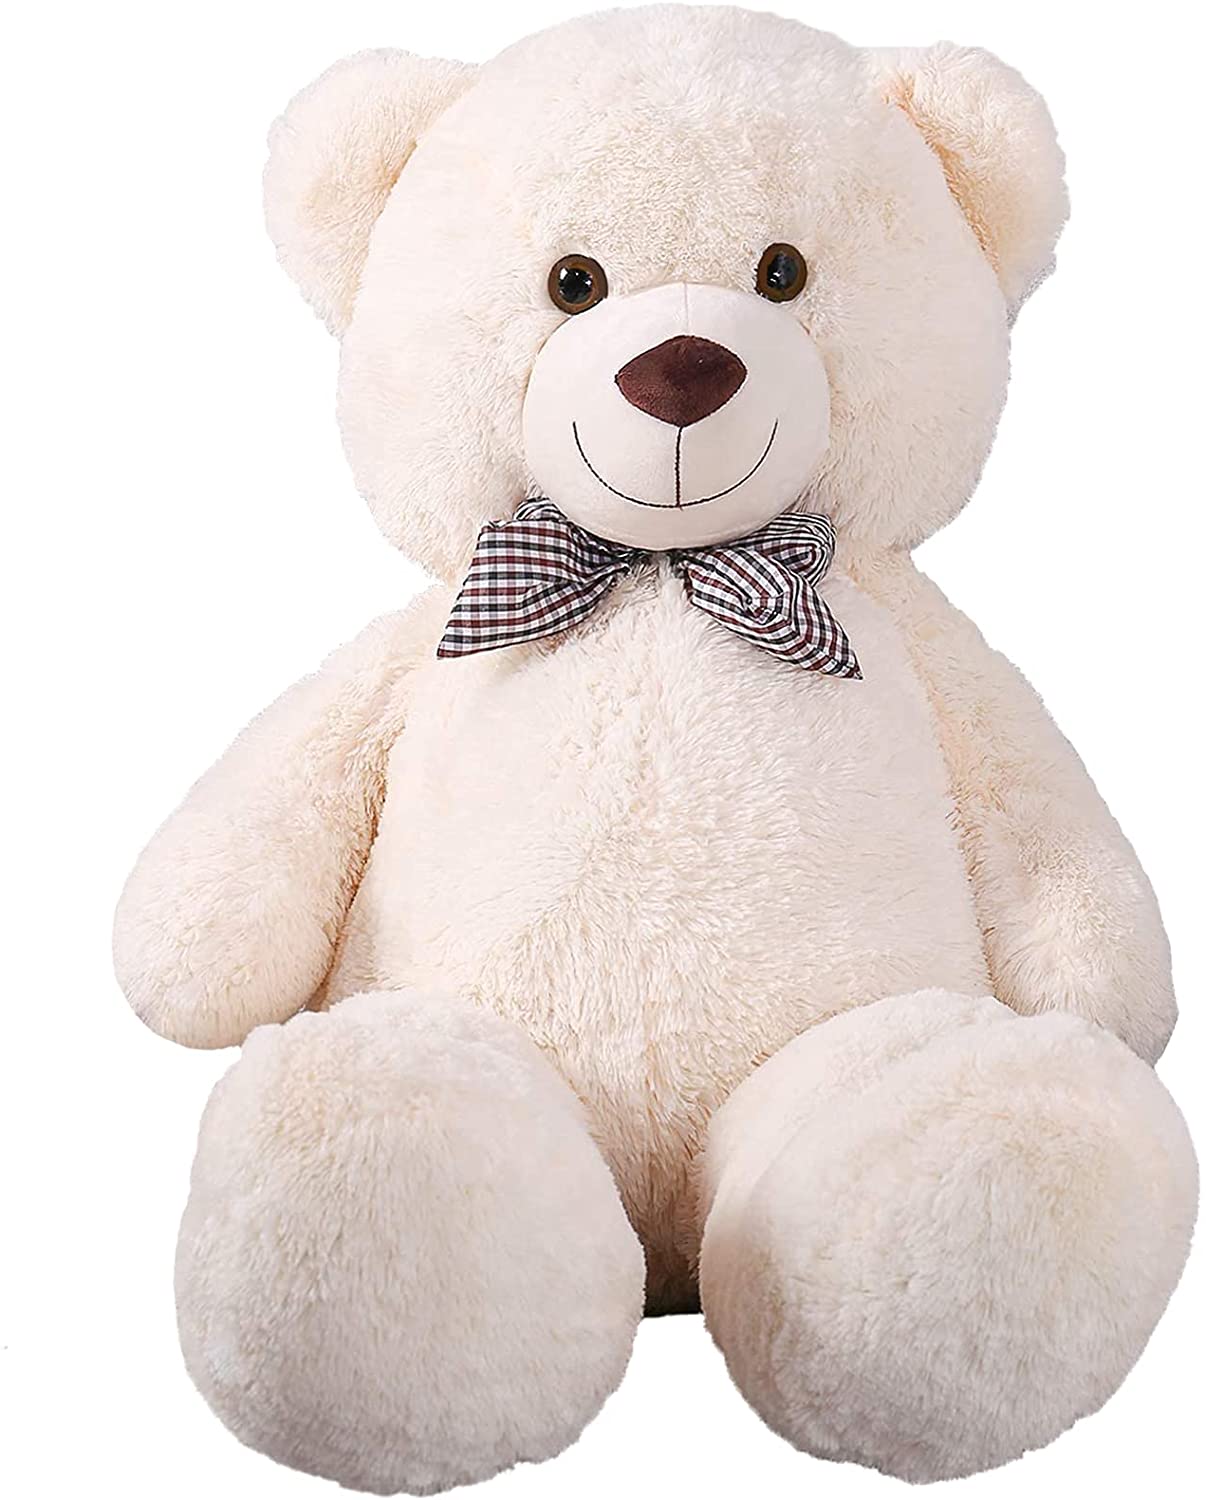 24" Giant Huge Brown Teddy Bear Plush Soft Doll Big Stuffed Animal Toy Kid Gift 